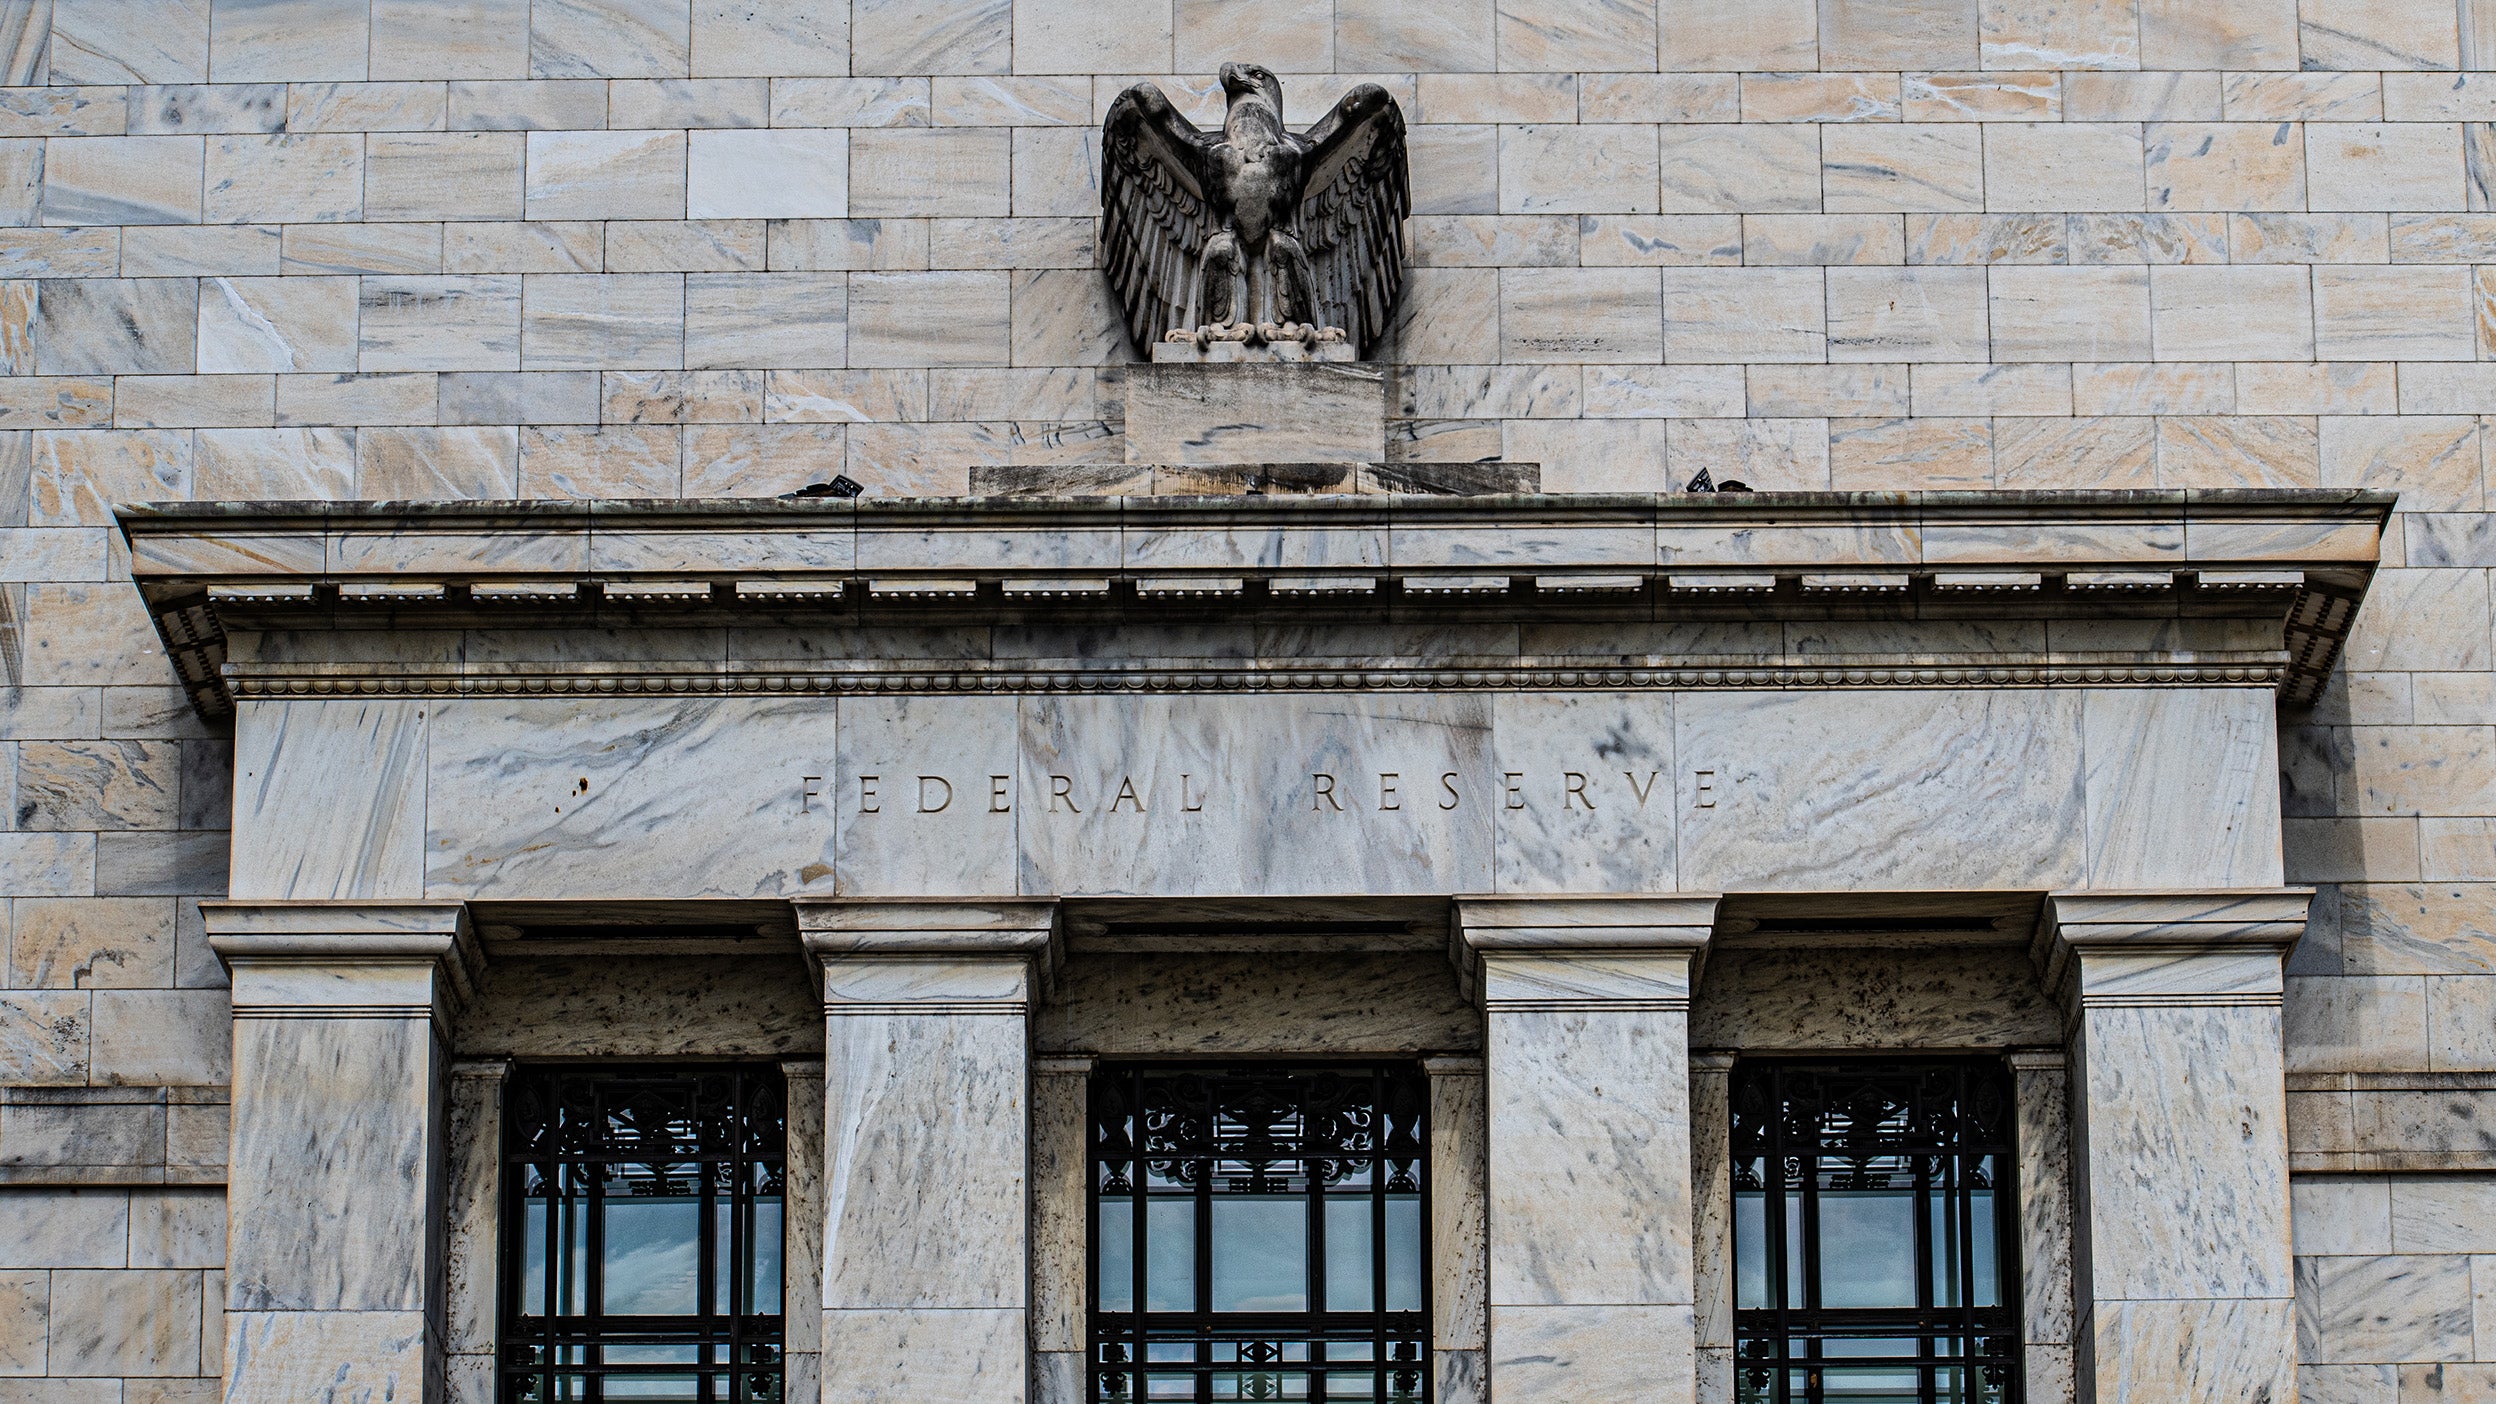 Federal Reserve building close-up.